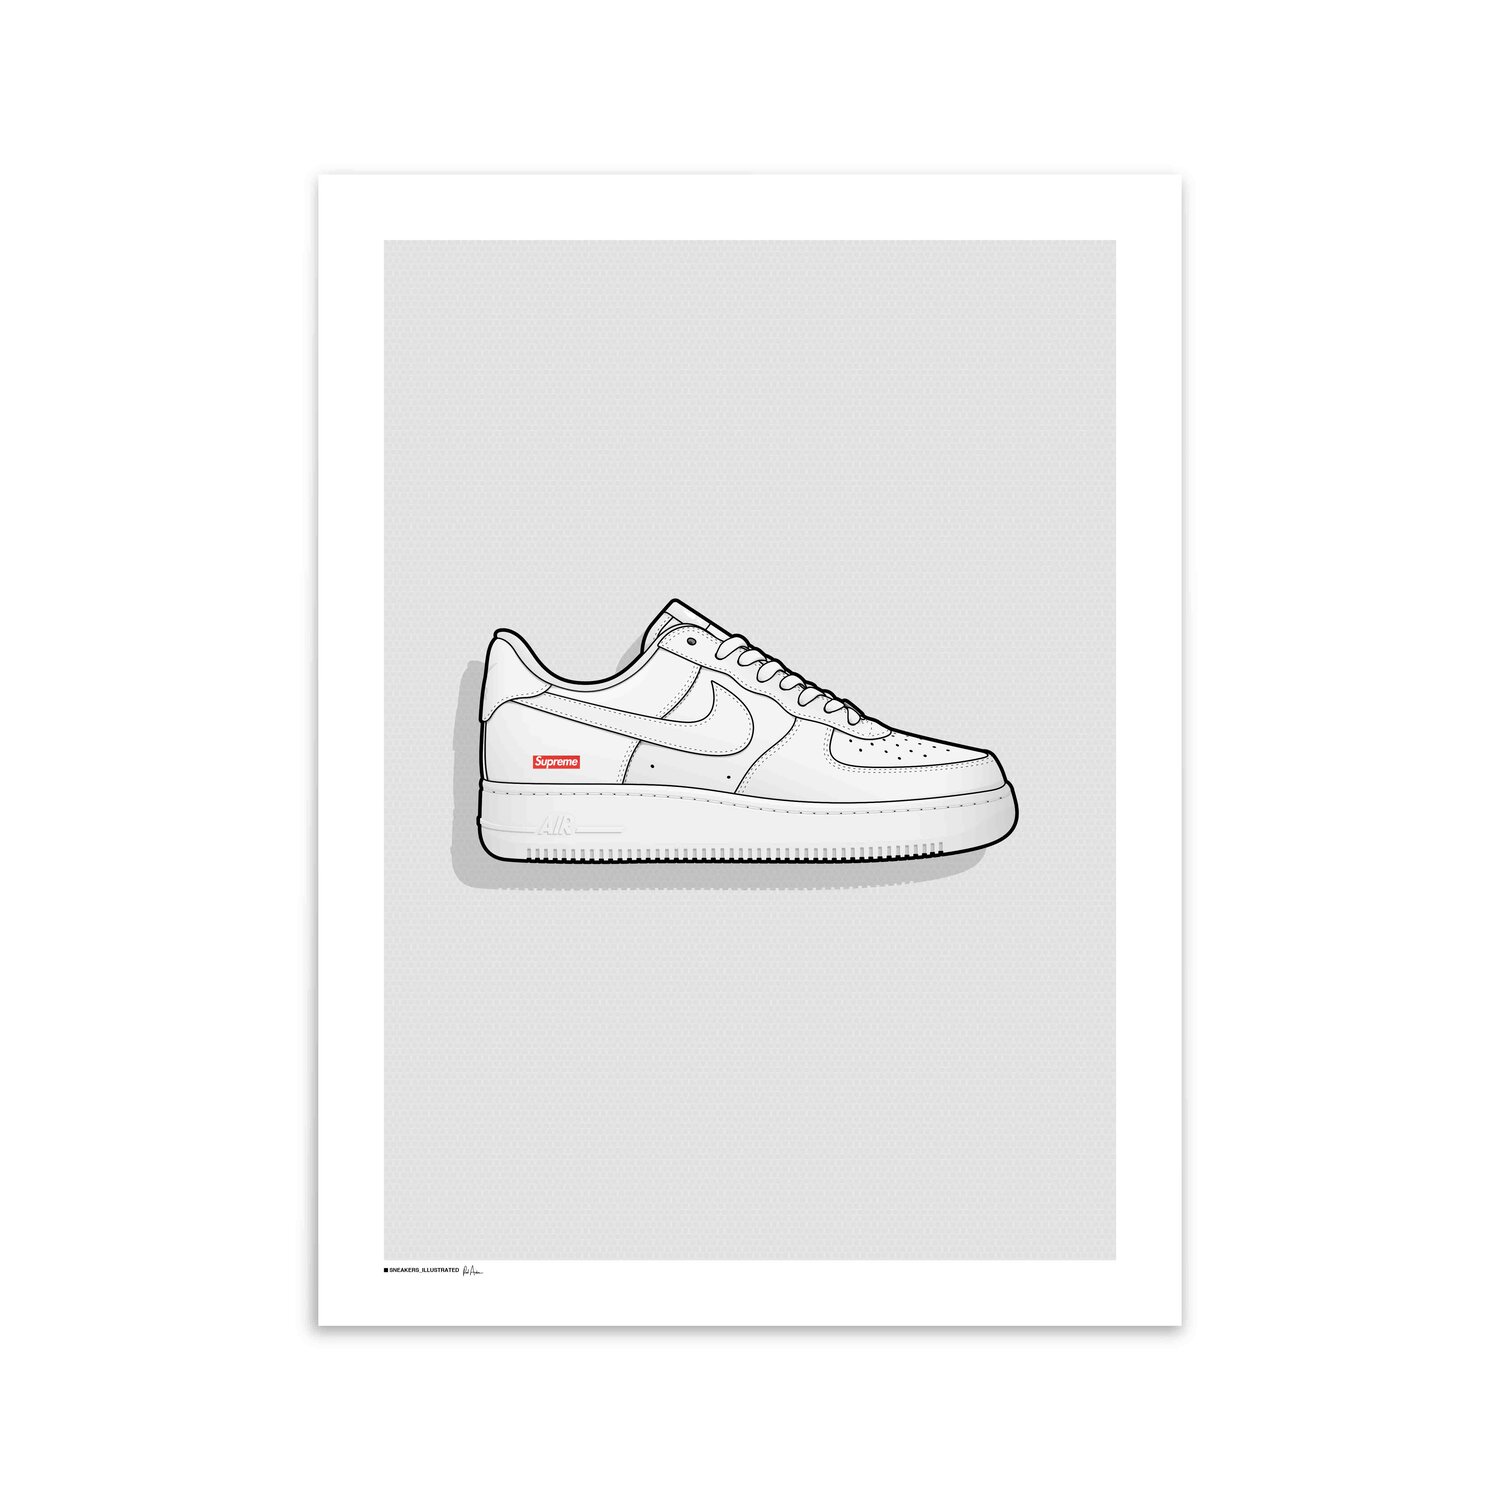 Descifrar El uno al otro repertorio Supreme x Nike Air Force 1 'White' Poster — Sneakers Illustrated